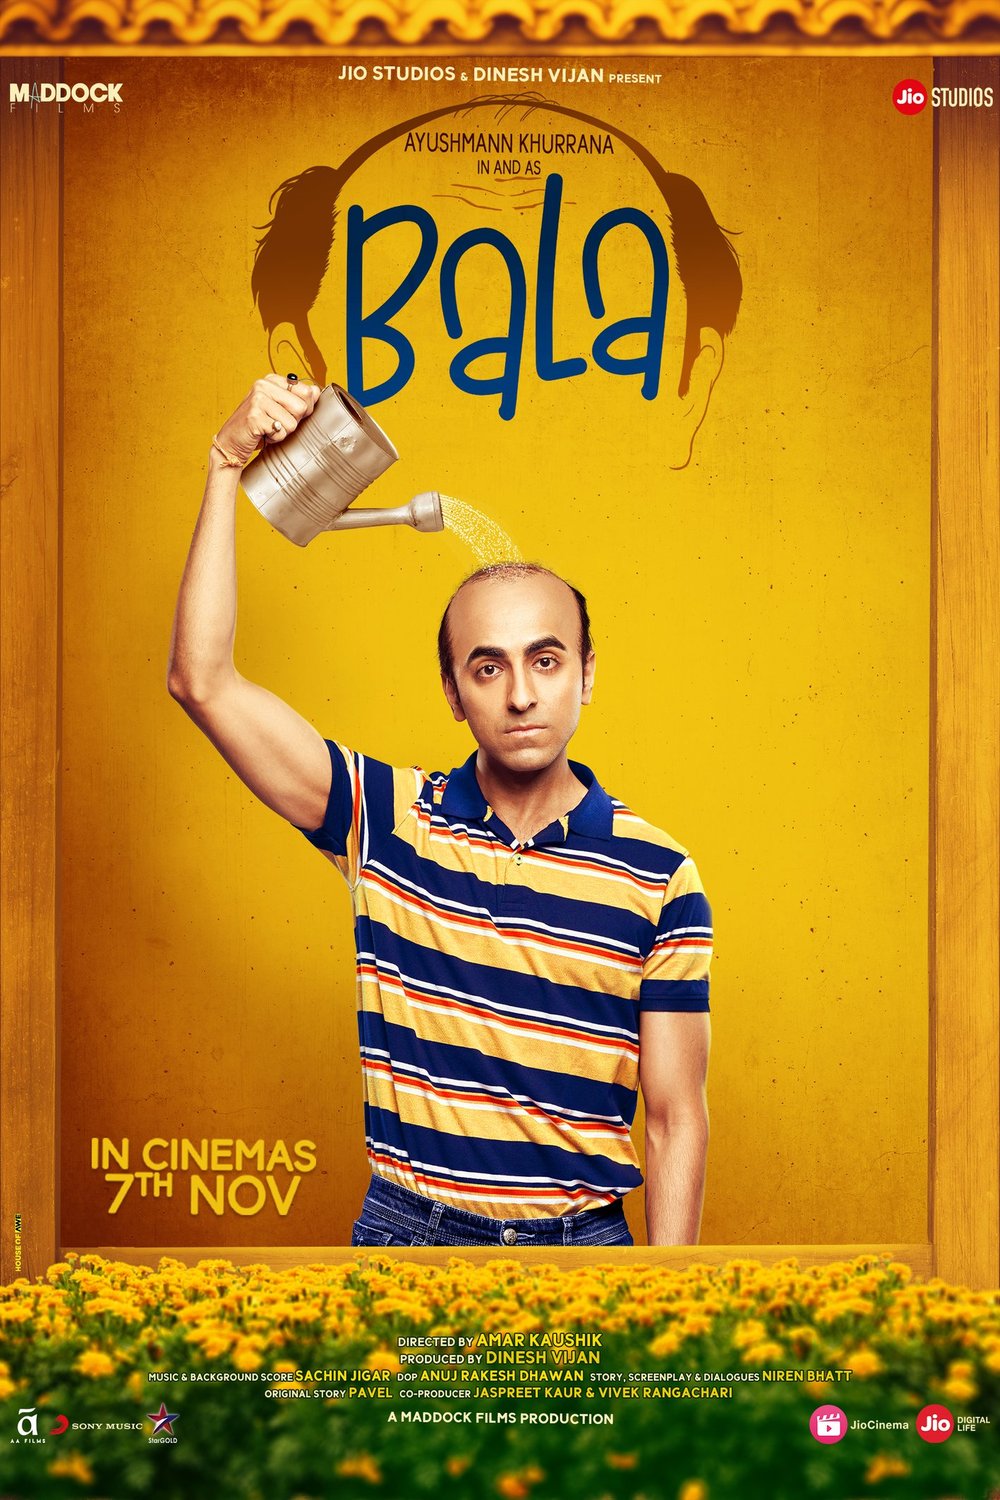 L'affiche originale du film Bala en Hindi